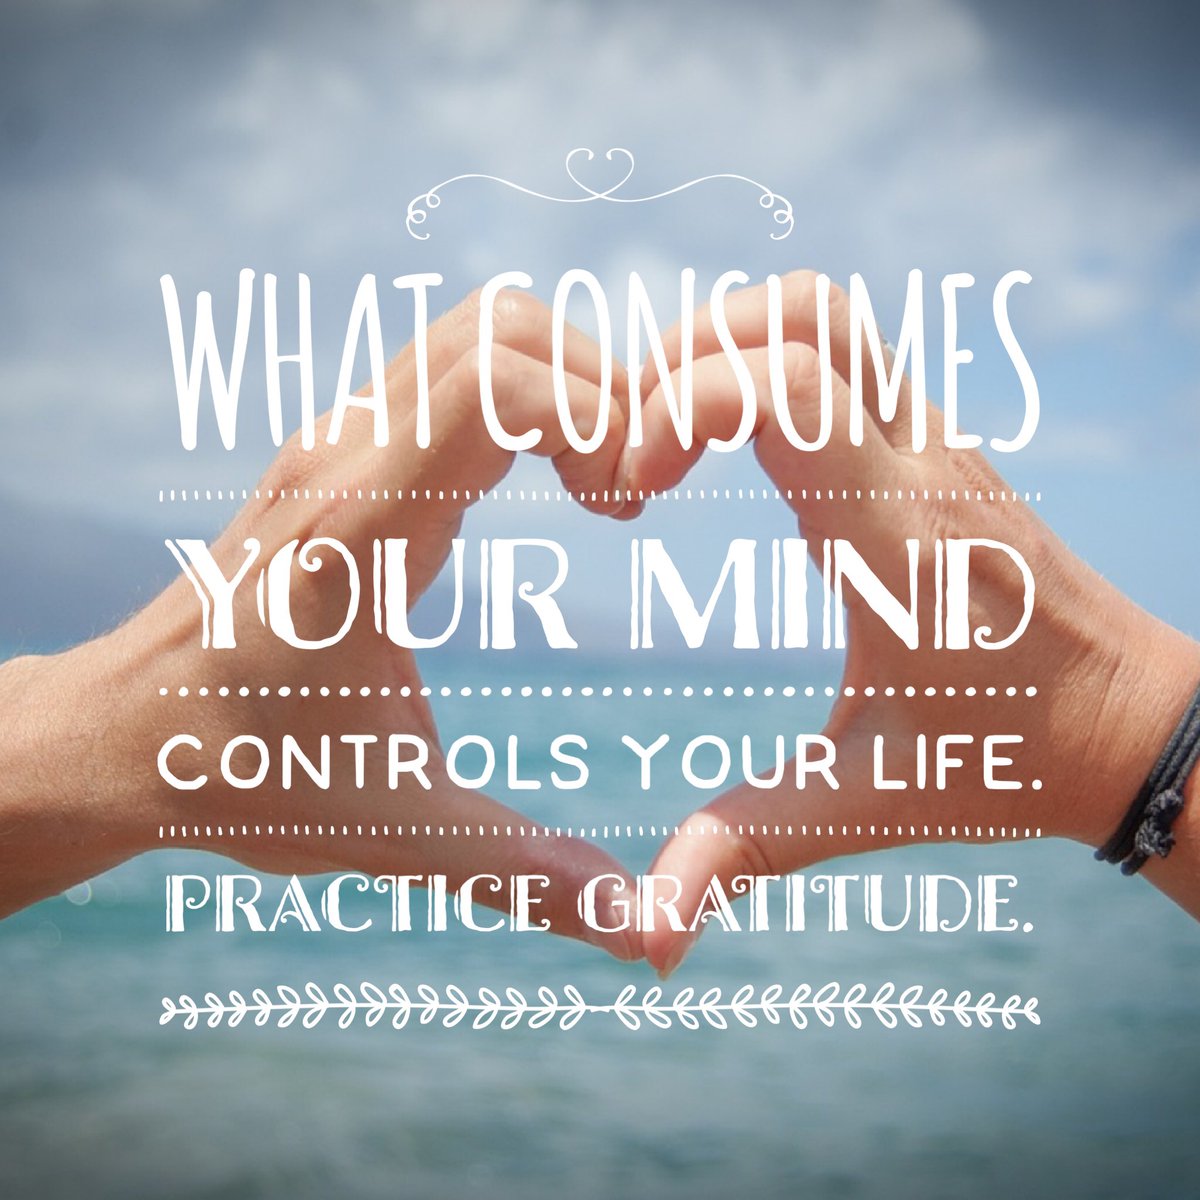 Practice Gratitude #EverydayGratitude